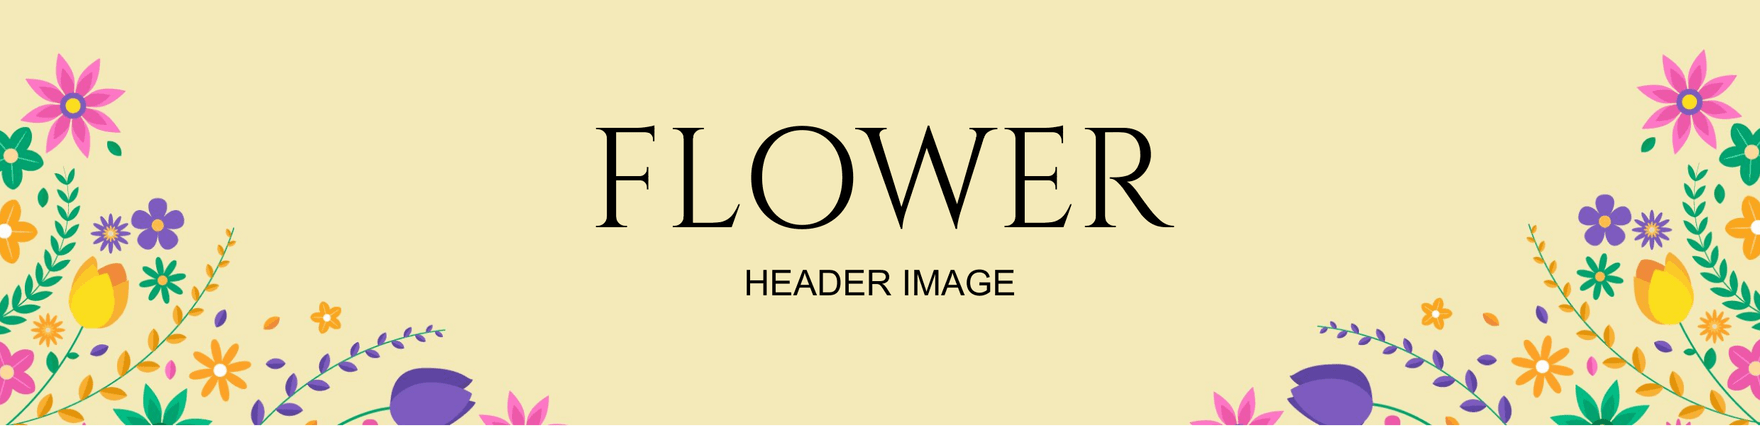 Flower Header Image